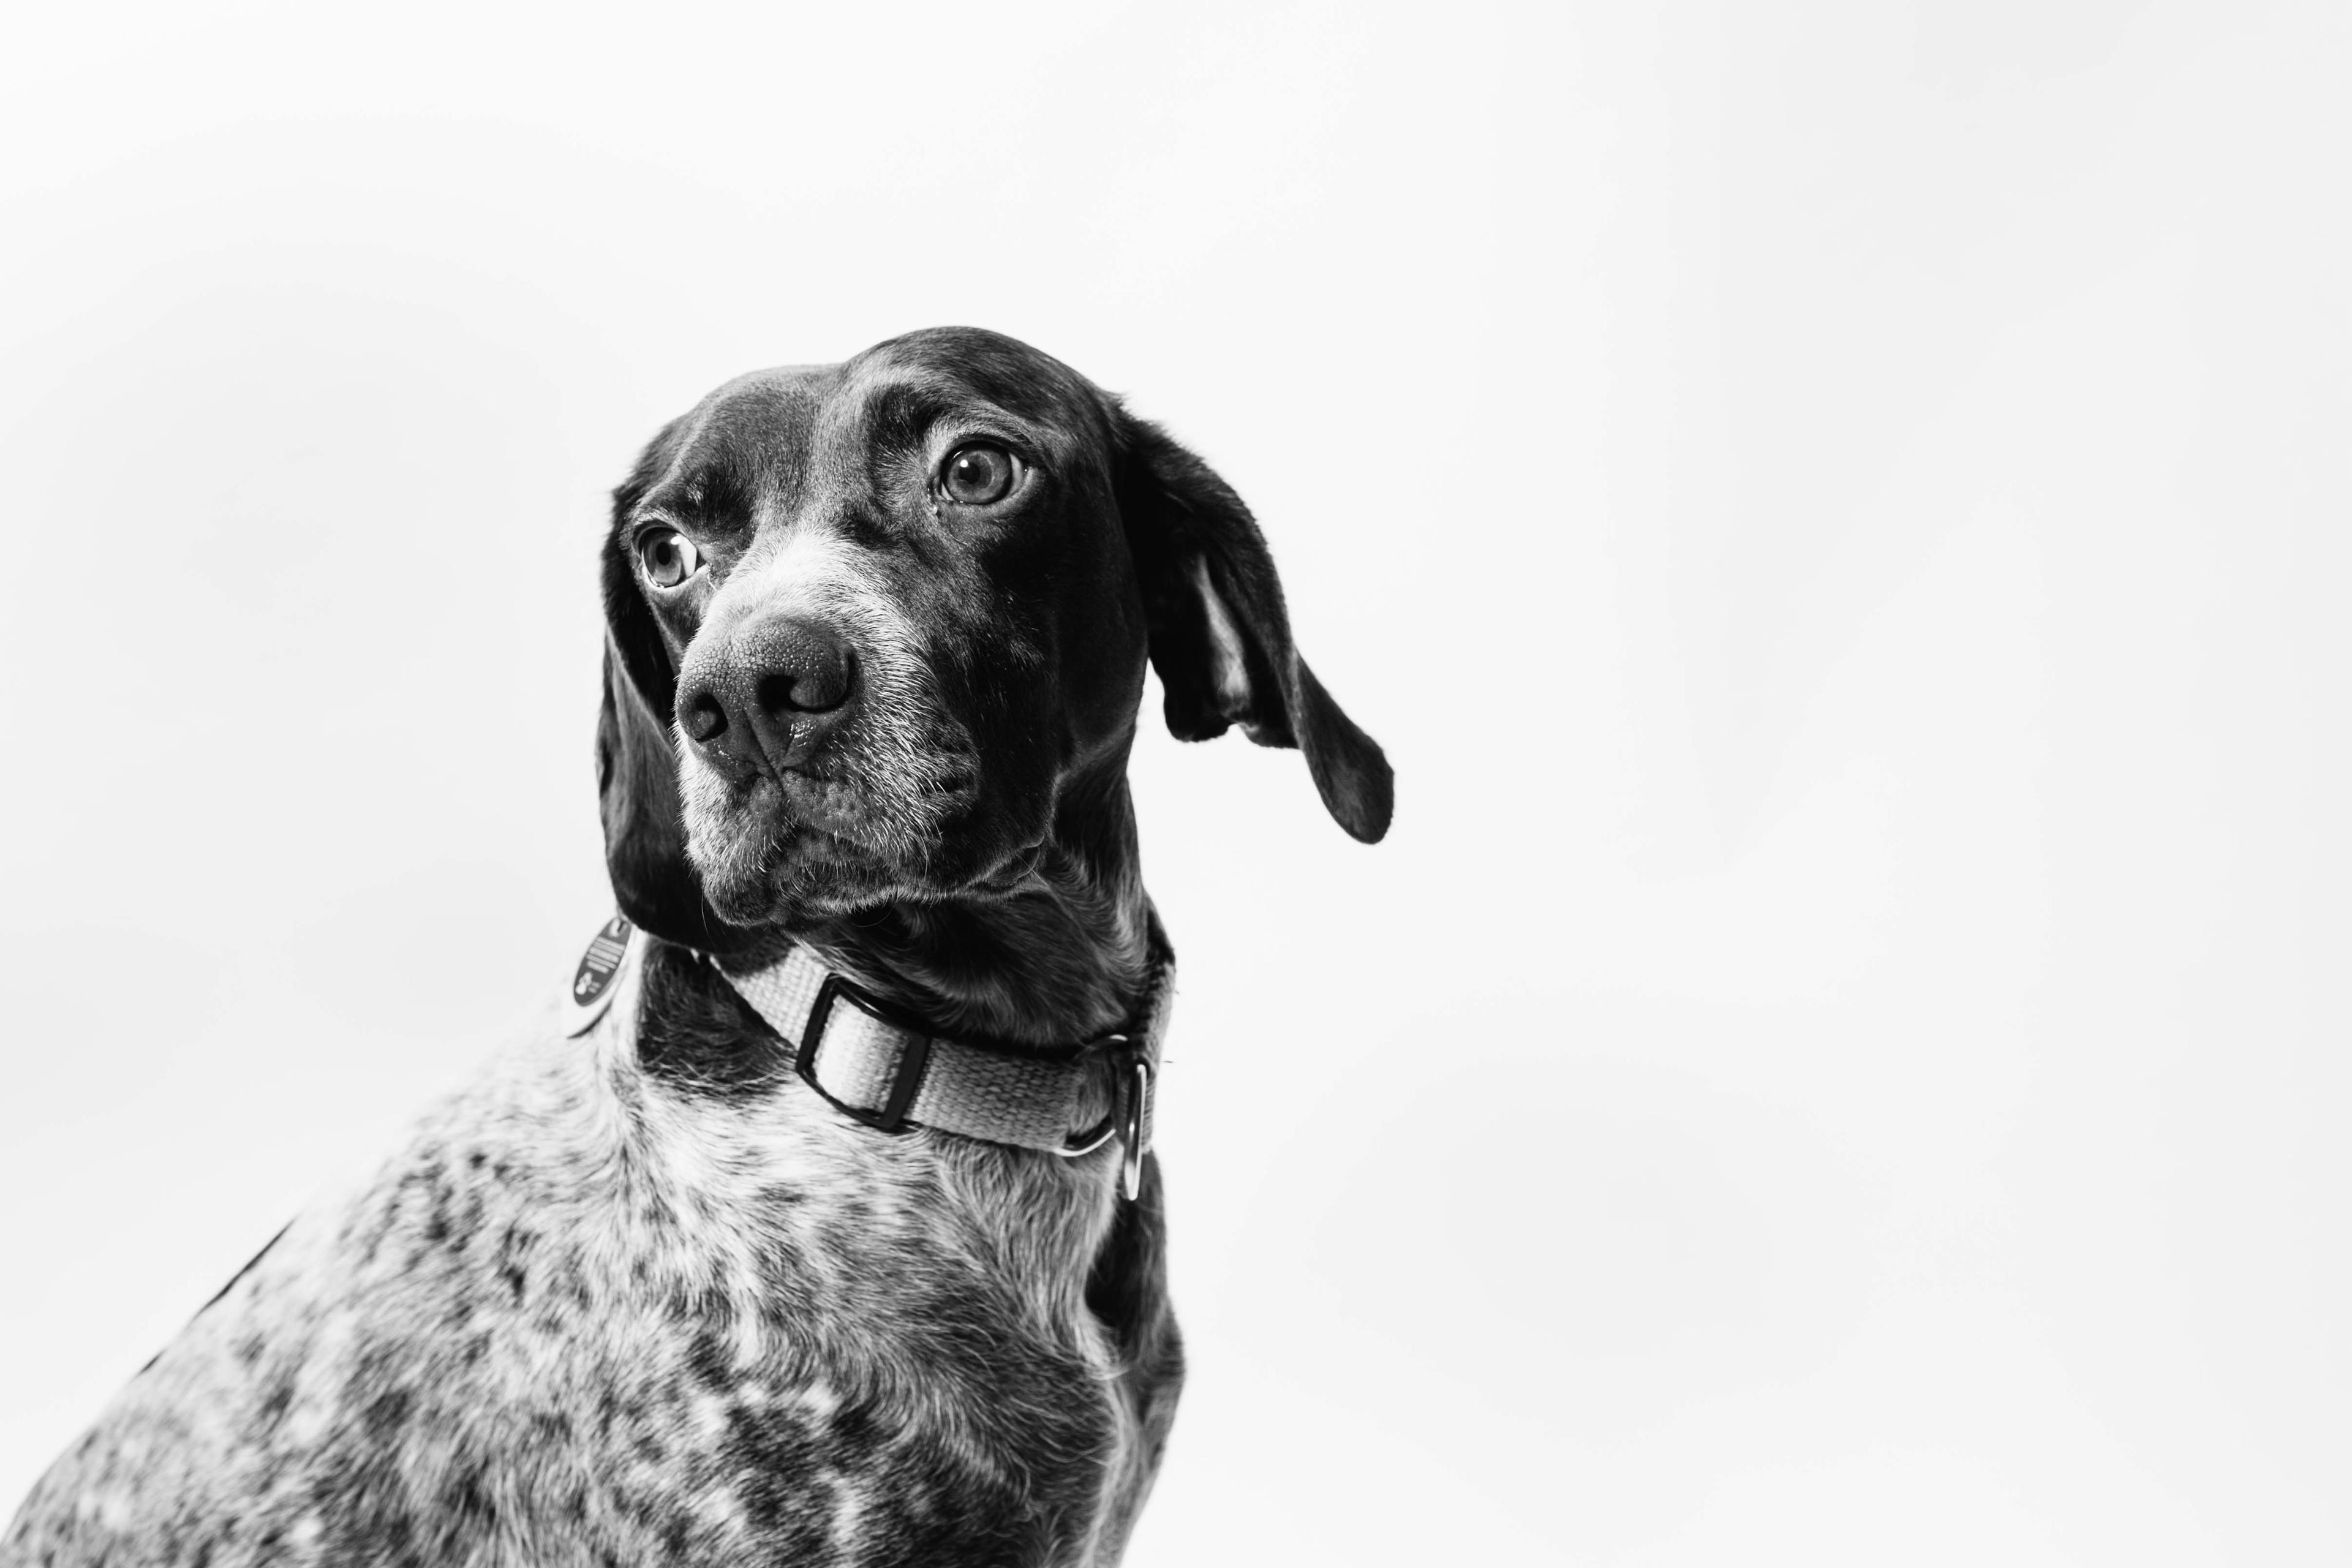 Photograph of a dog, taken by Fabian Gieske